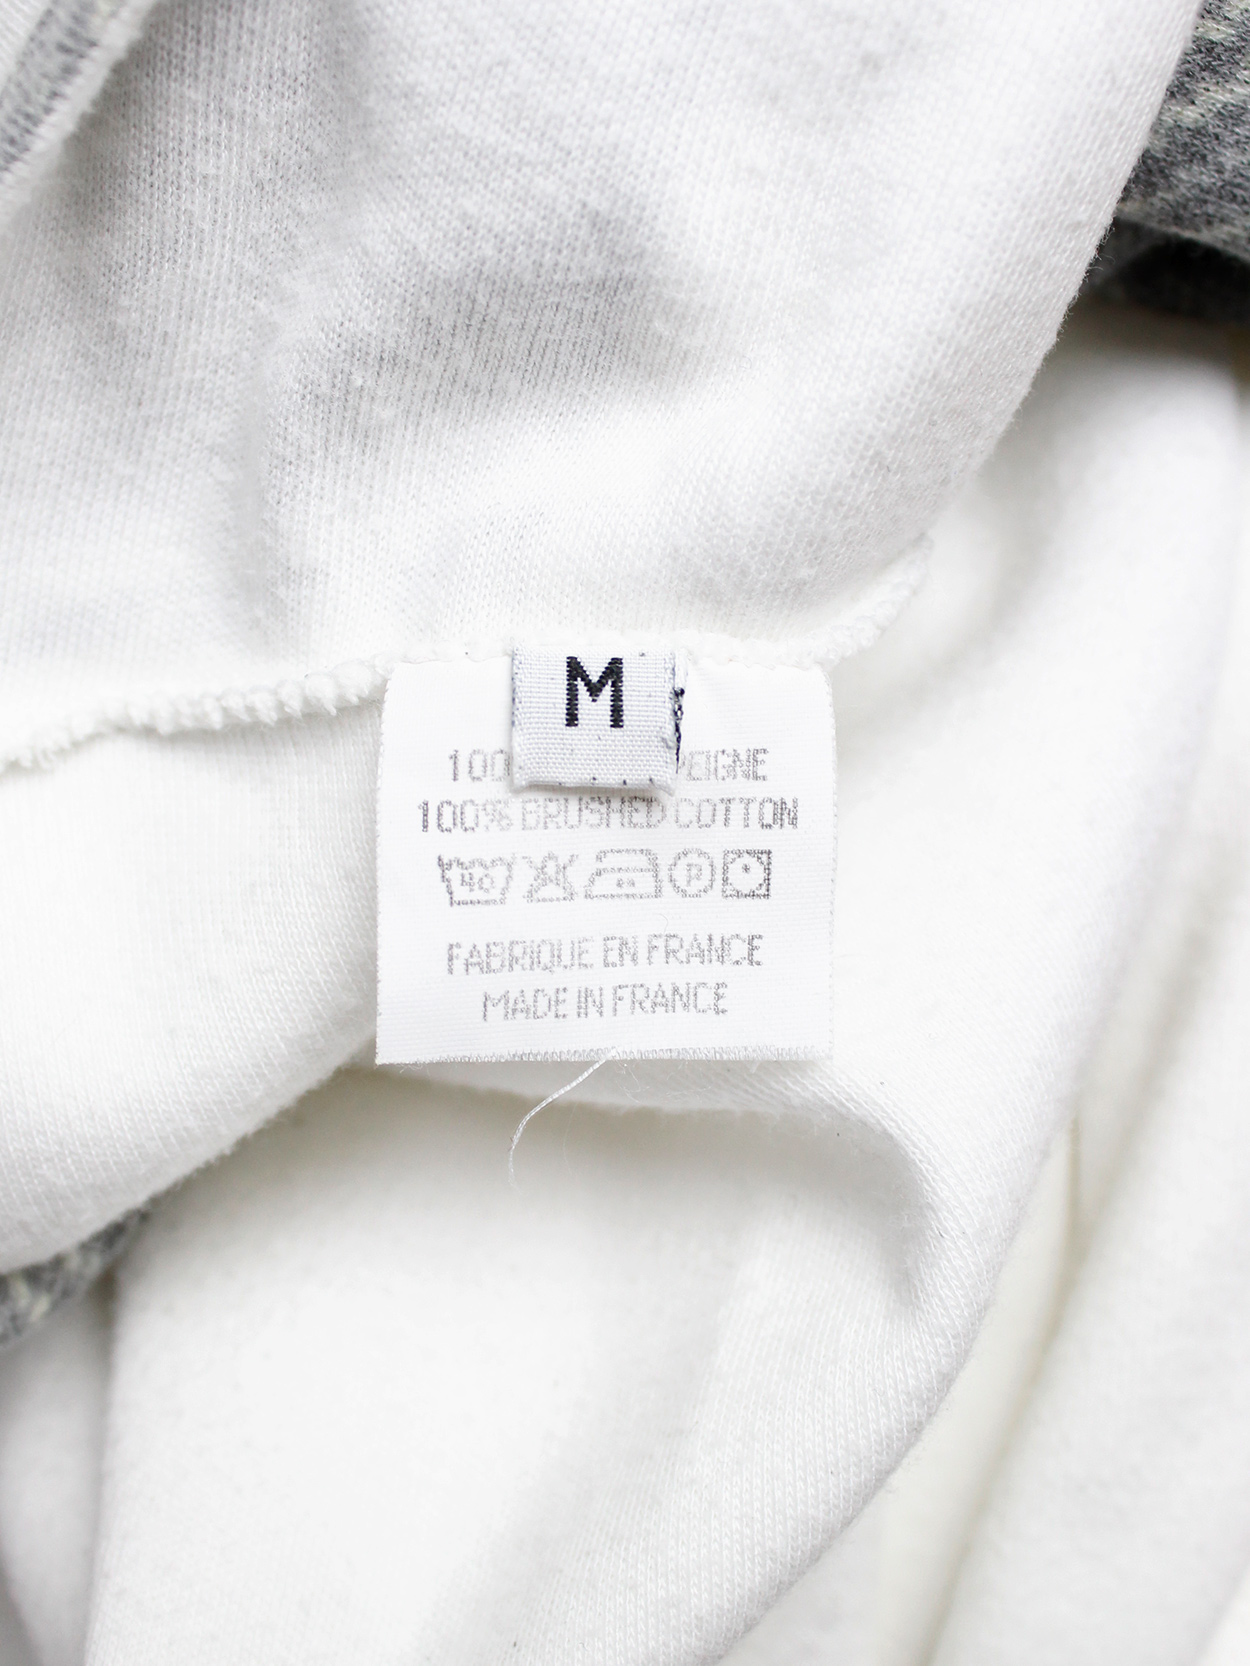 Maison Martin Margiela artisanal jumper with printed grey texture ...